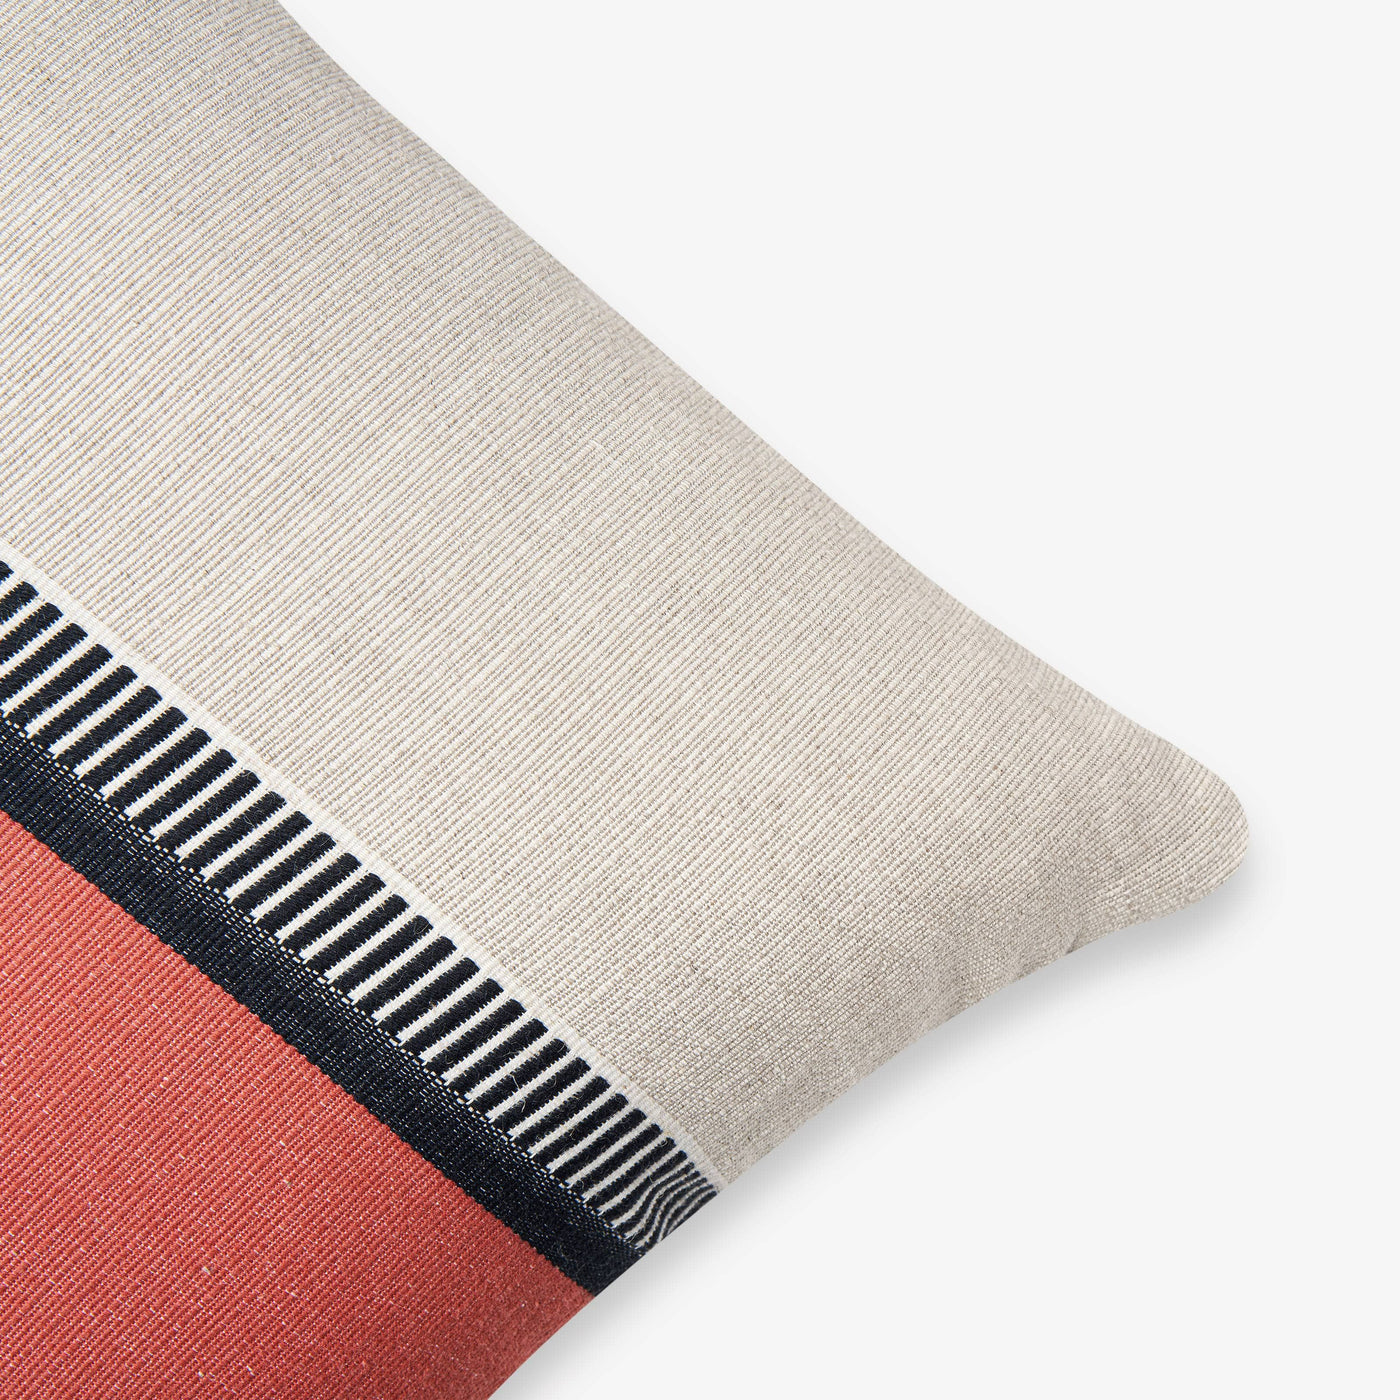 Dumnoni Cushion Cover, Red - Beige, 35x55cm 3